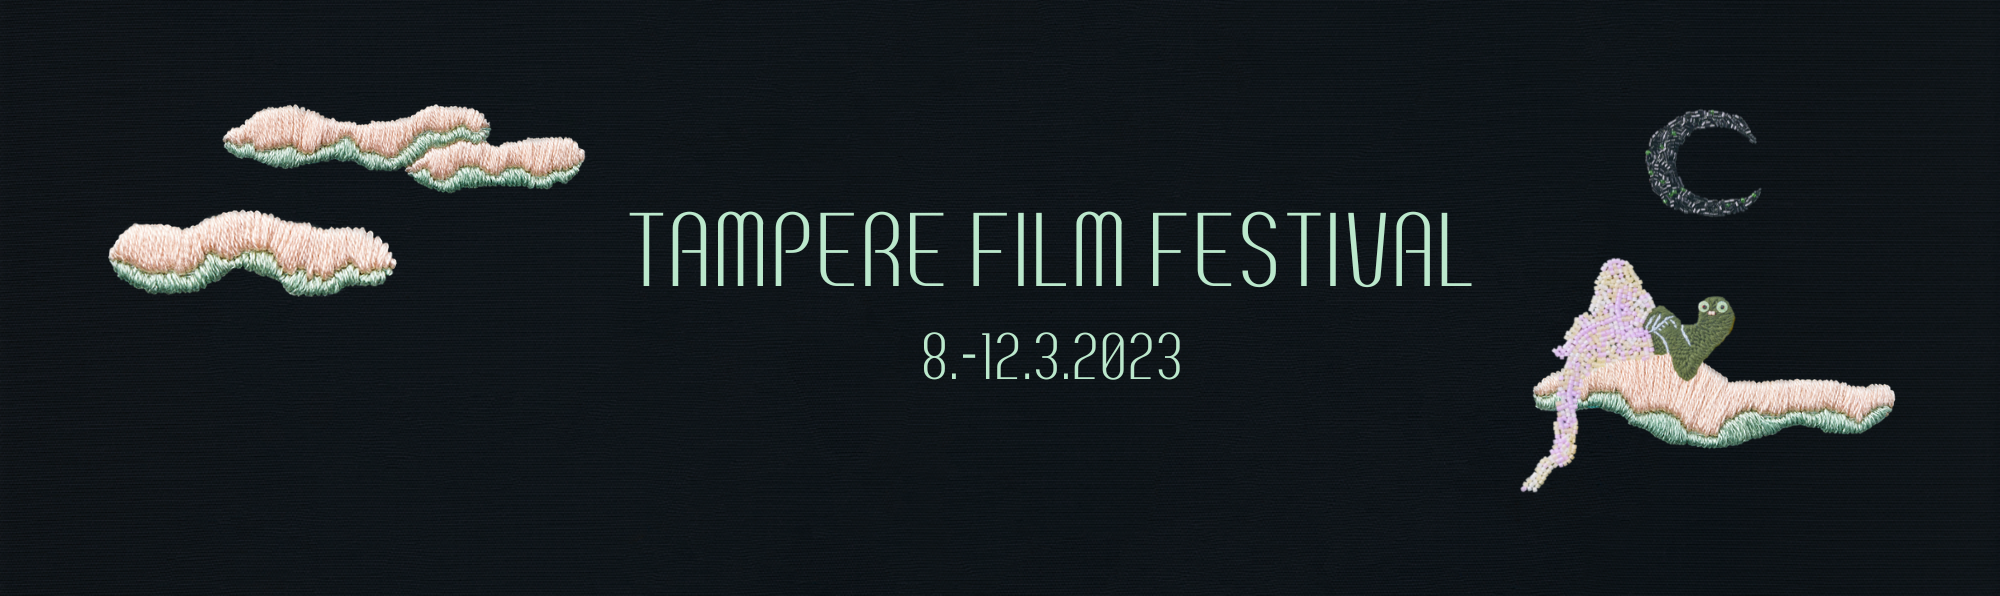 Tampere Film Festival 2023 banneri.